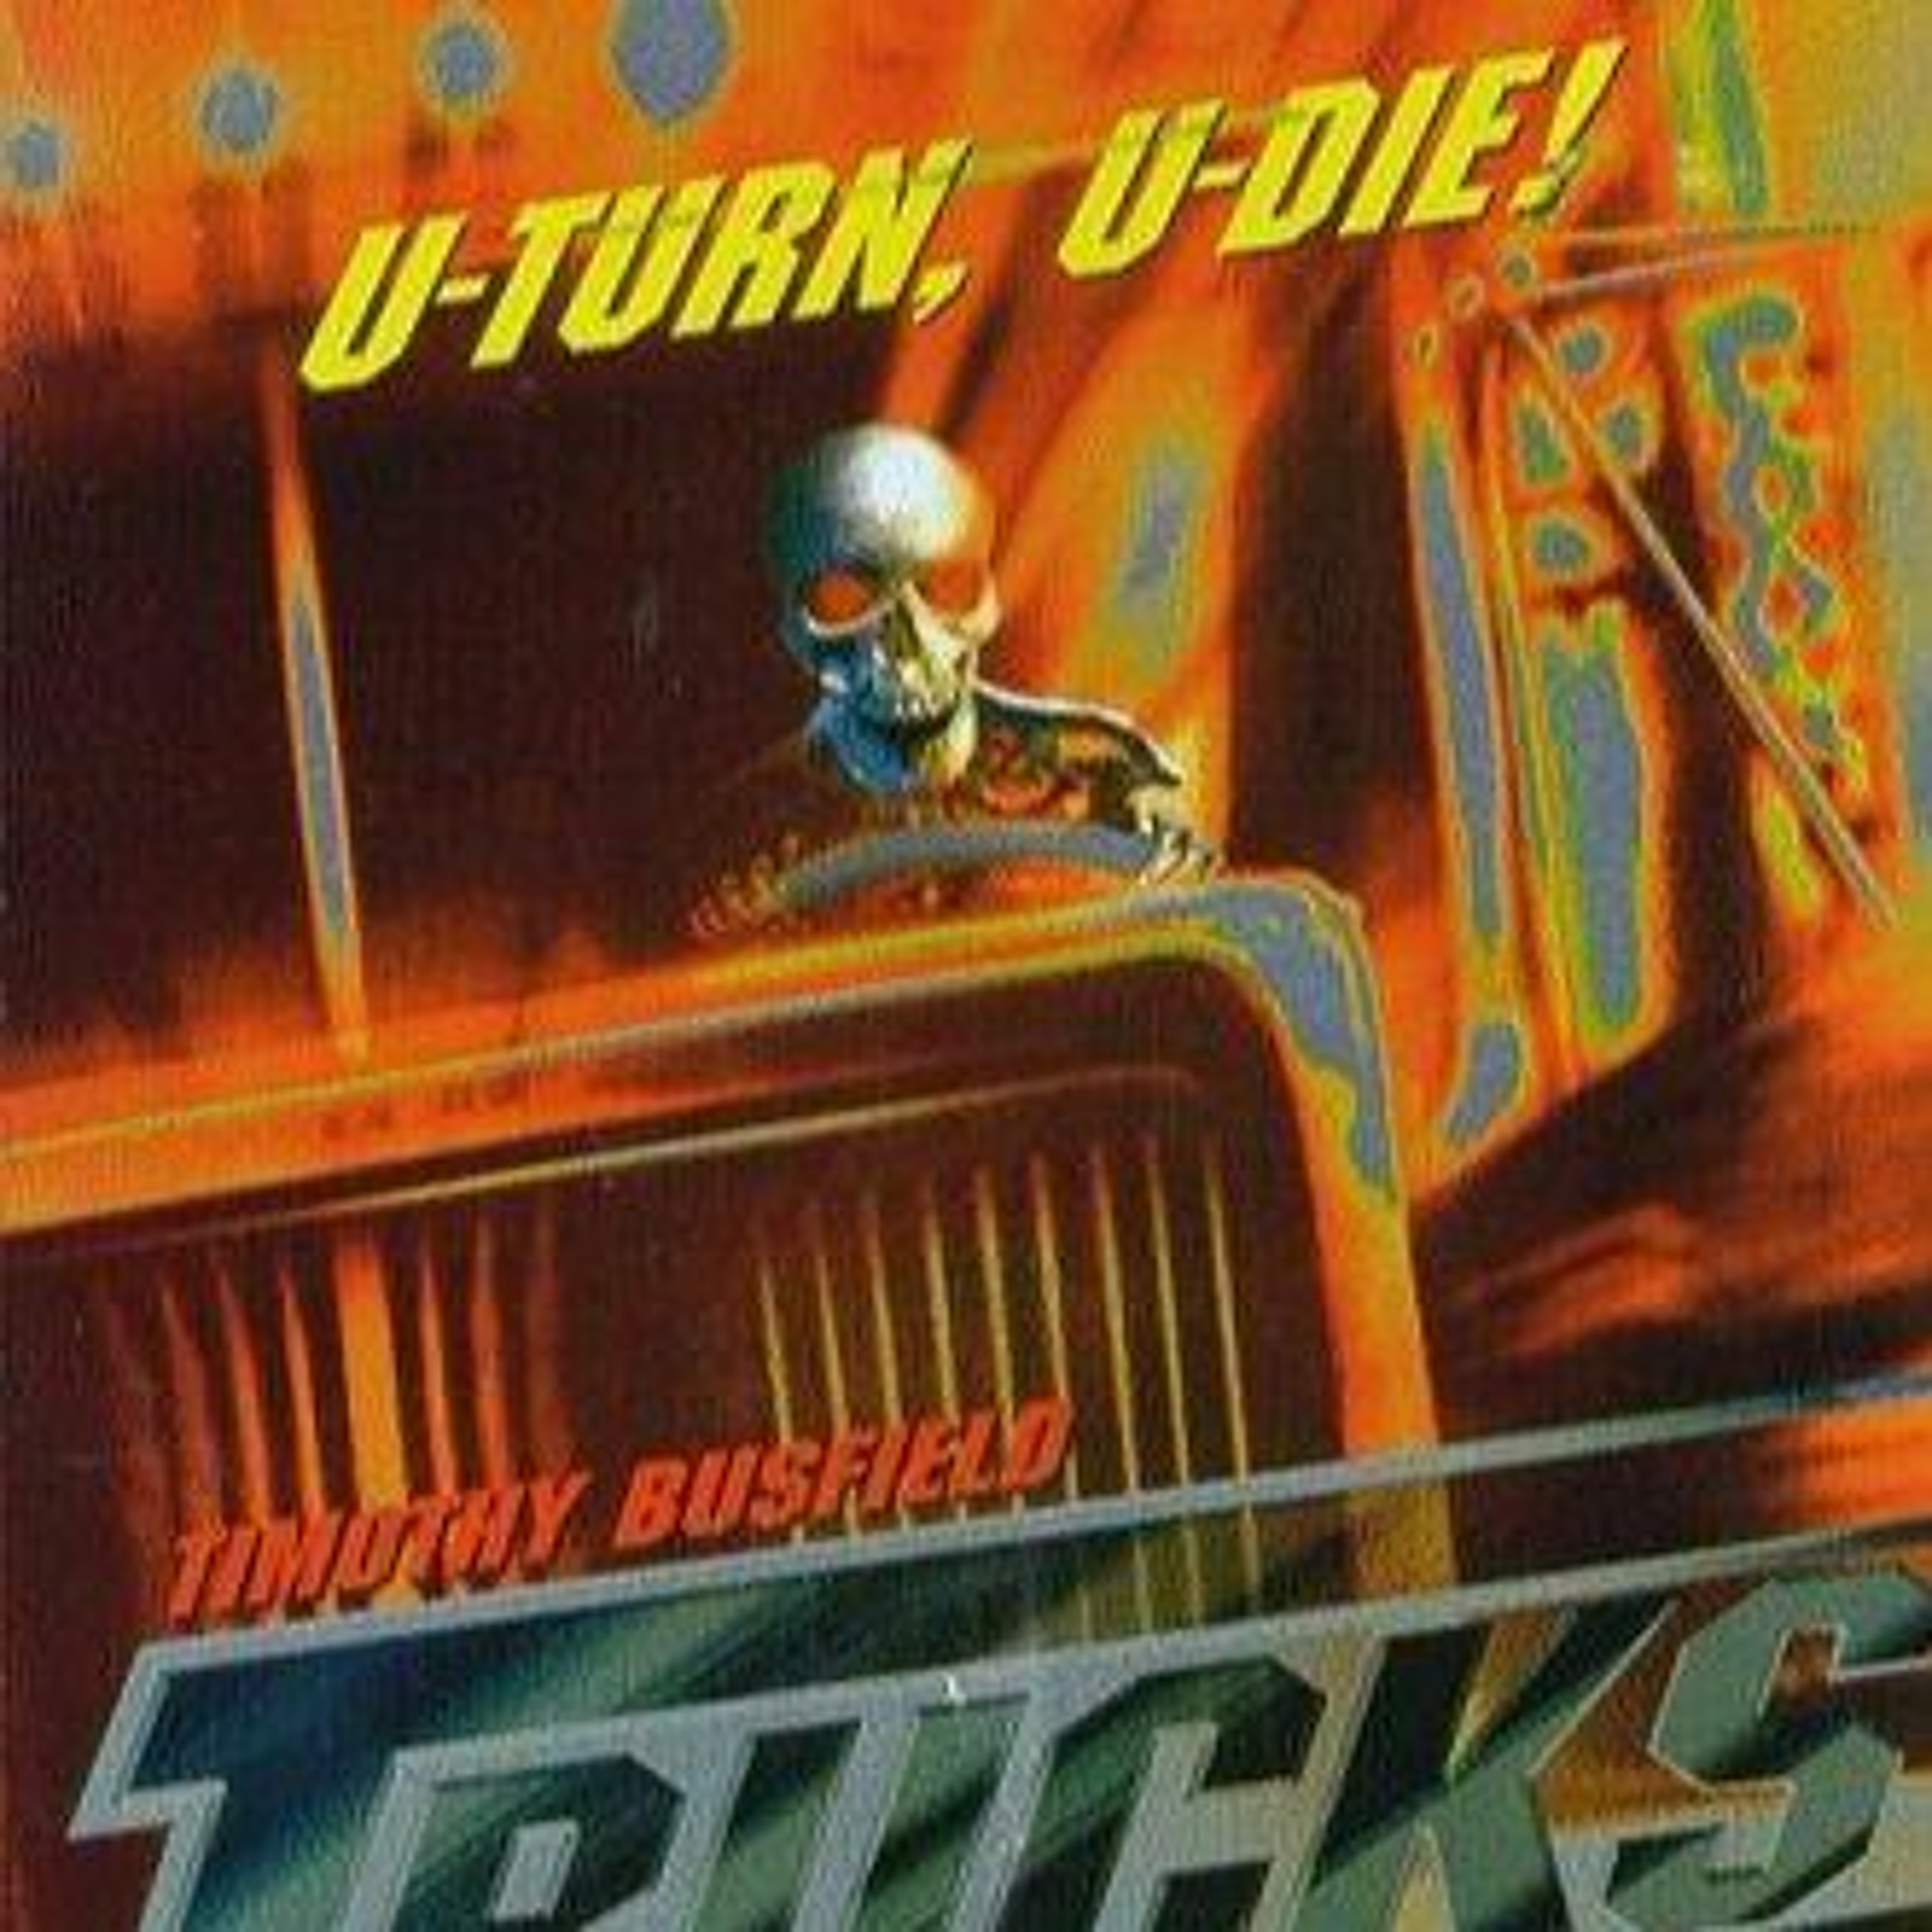 46 - Trucks (1997)